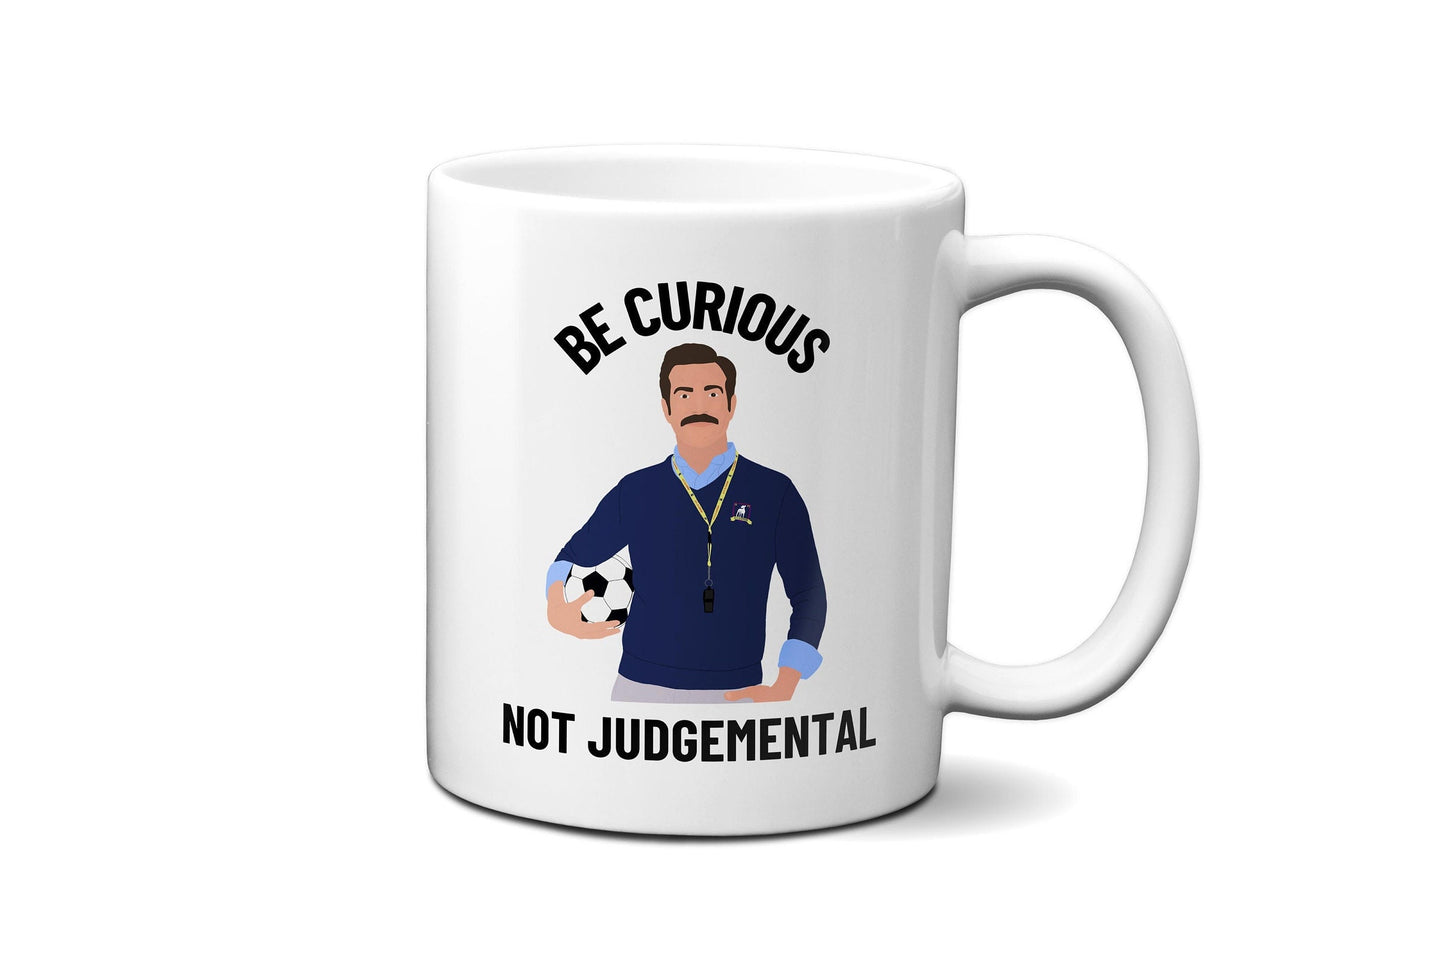 Be Curious Not Judgemental (British English Spelling) | Ted Lasso Mug